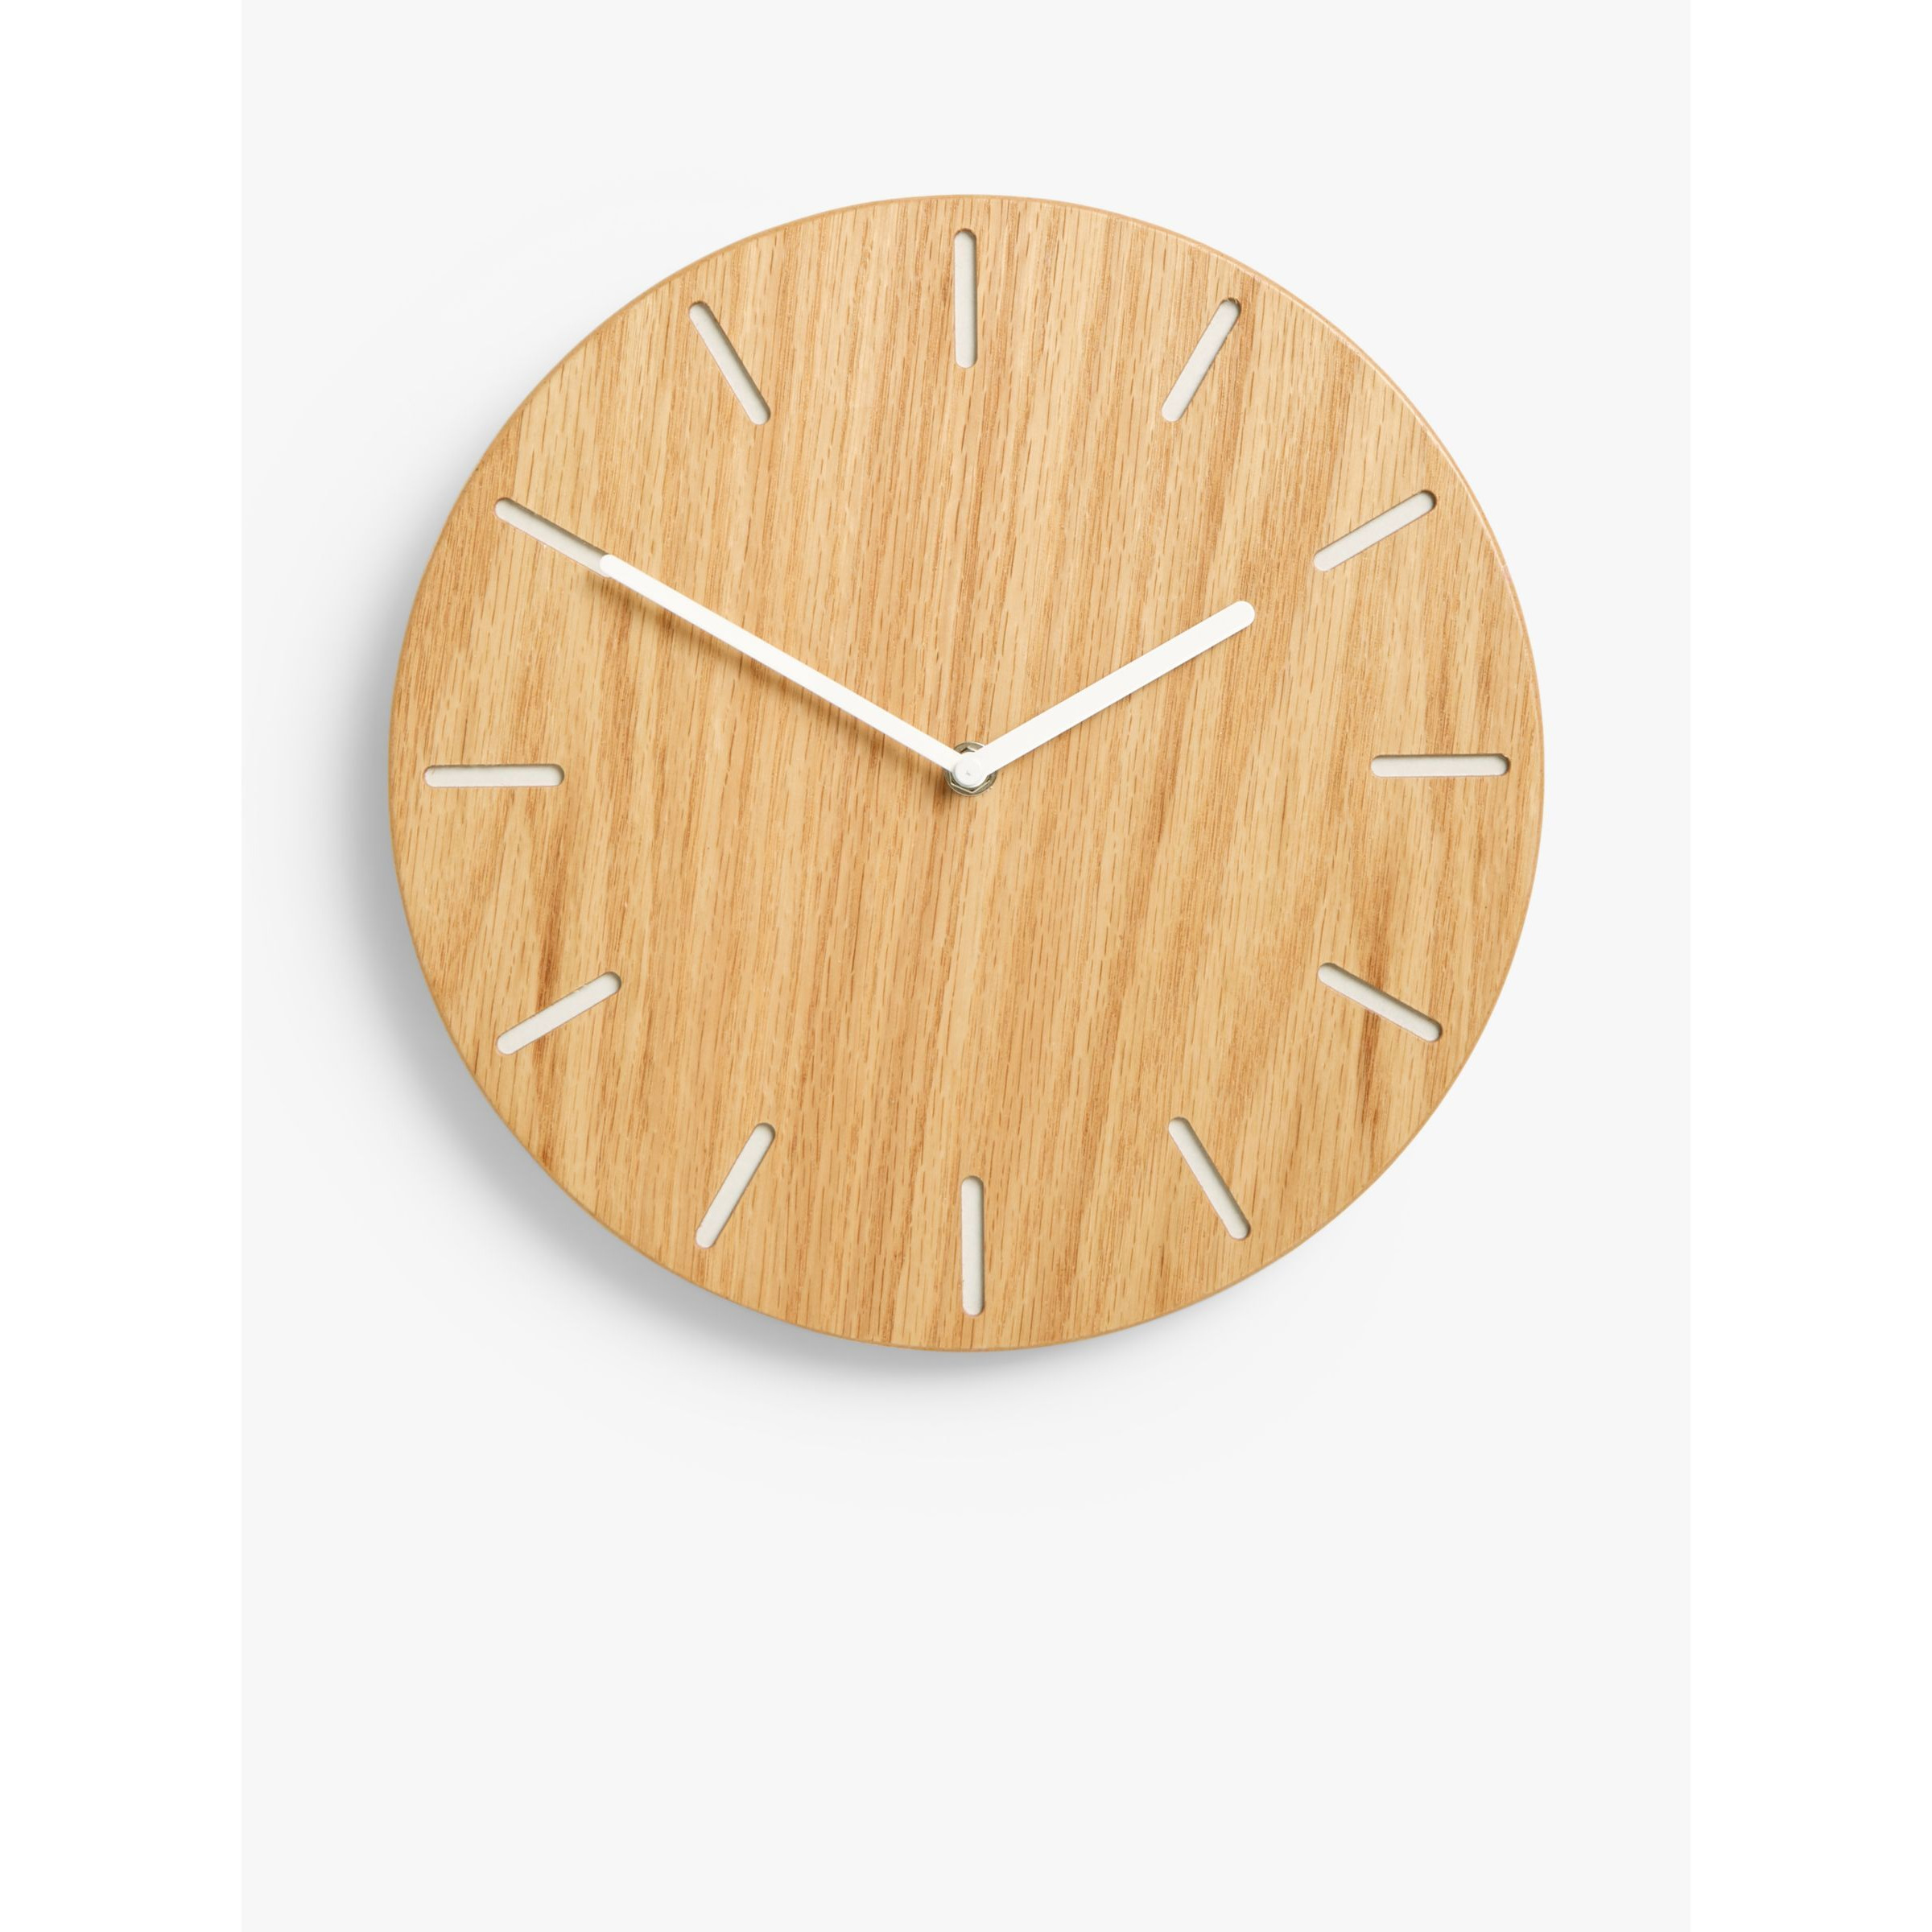 John Lewis Round Wood Wall Clock, 30cm, Natural - image 1